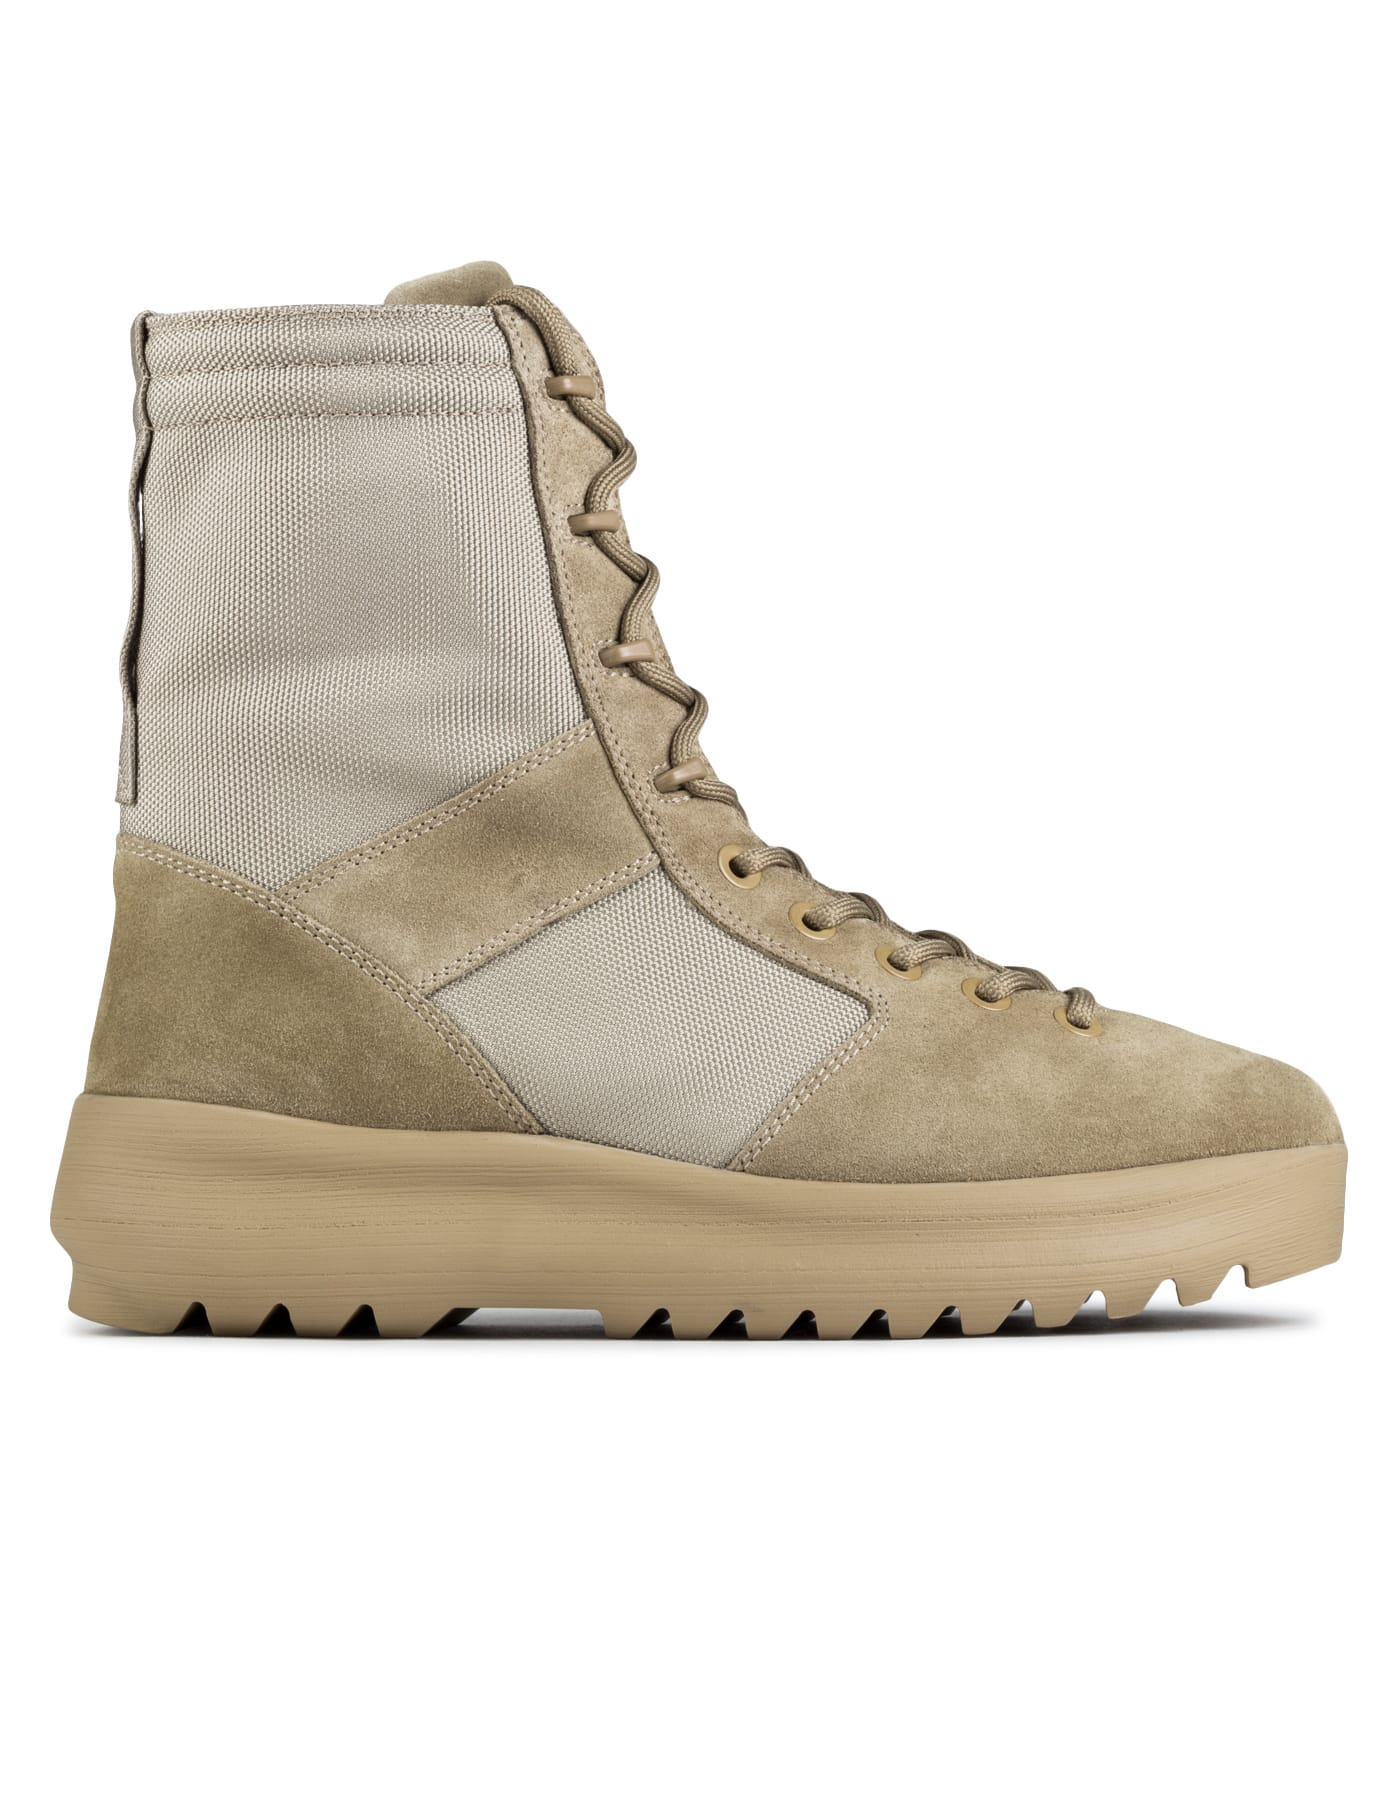 Yeezy season3 military boots